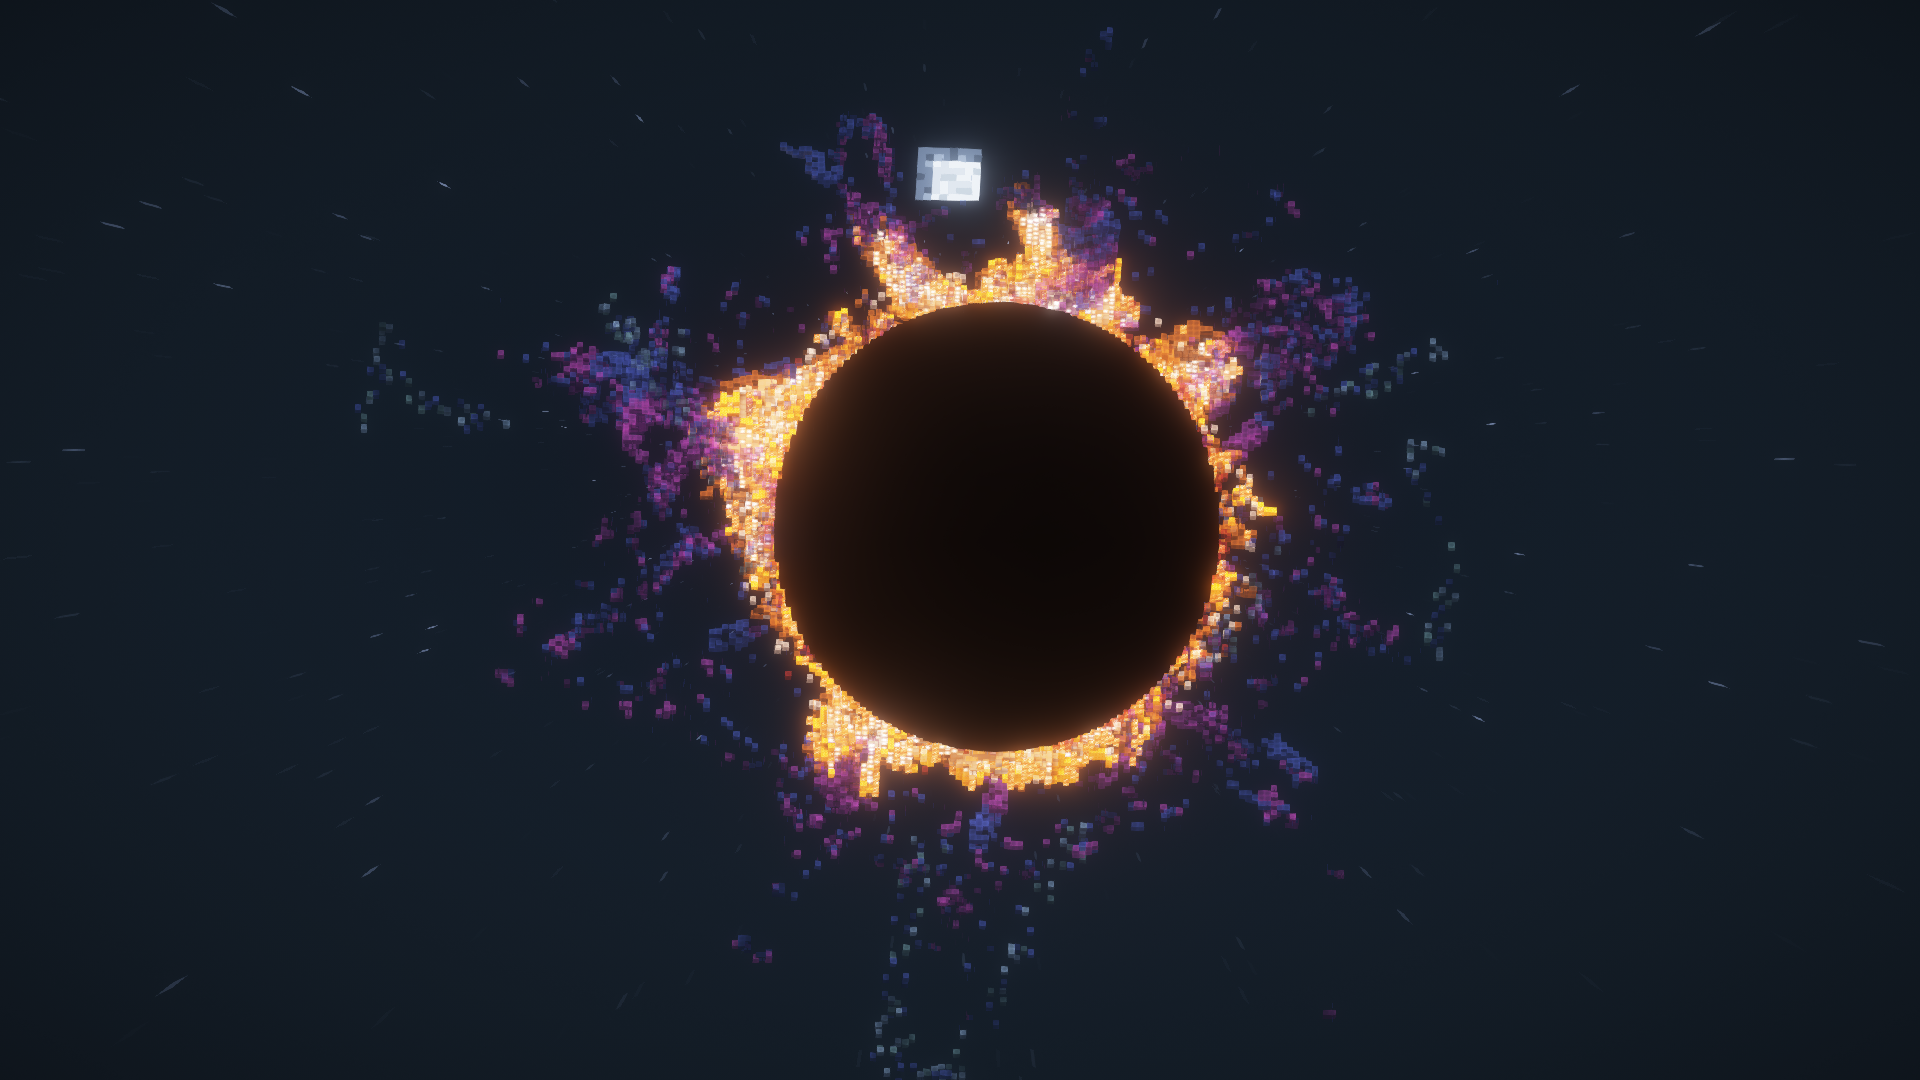 Minecraft build of an eclipse